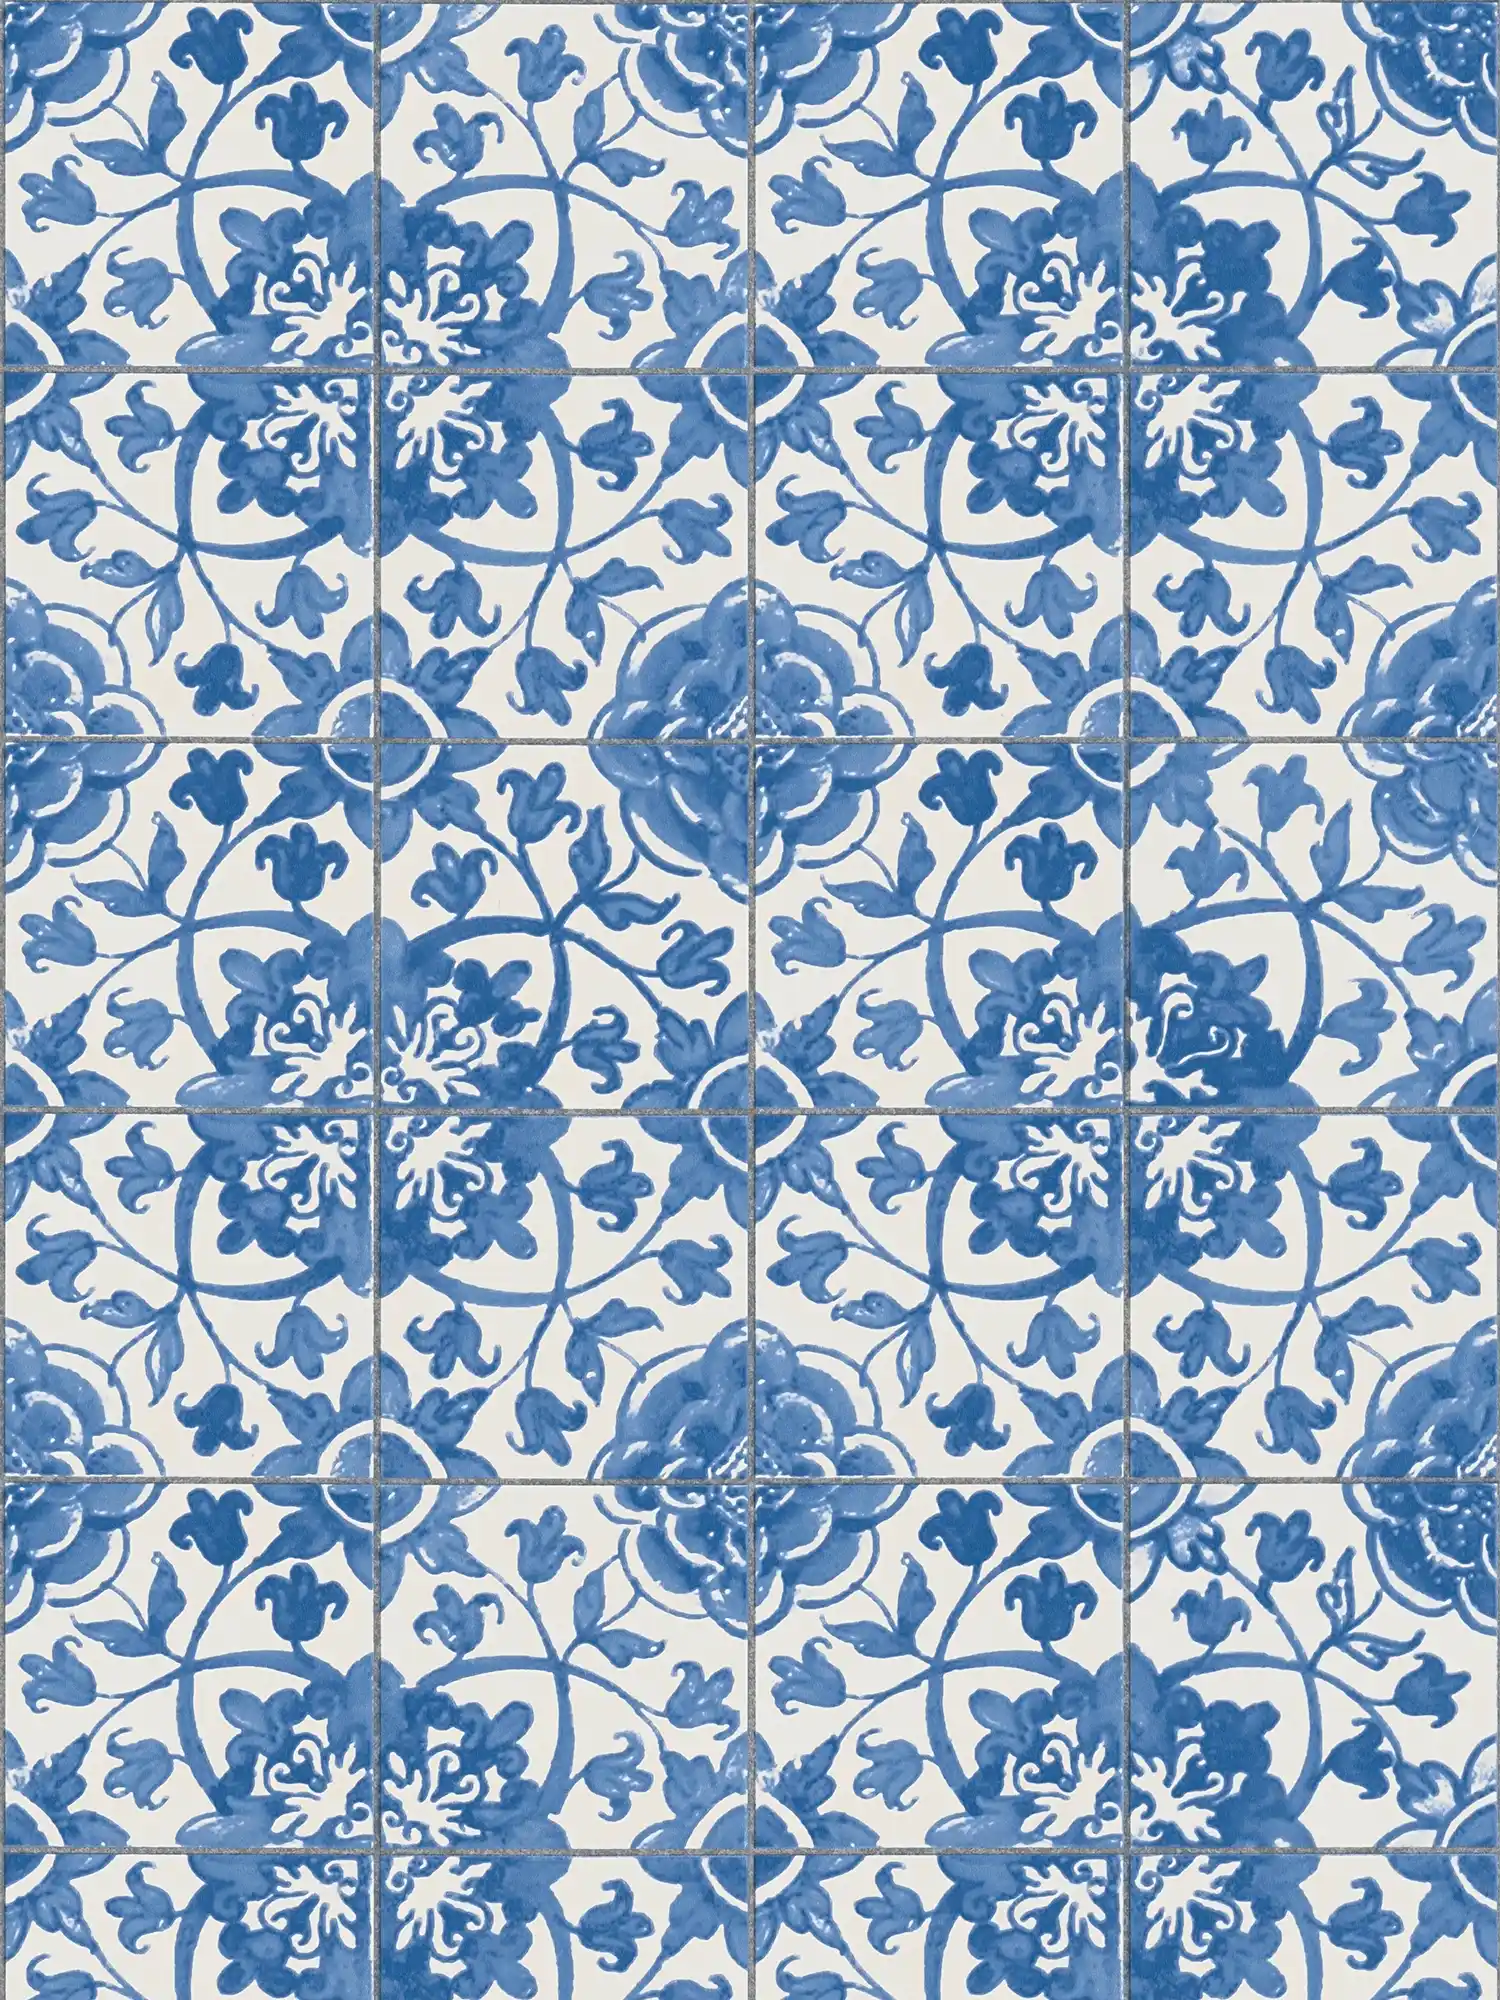 Zelfklevend behangpapier | Vintag style tile look - blauw, wit
